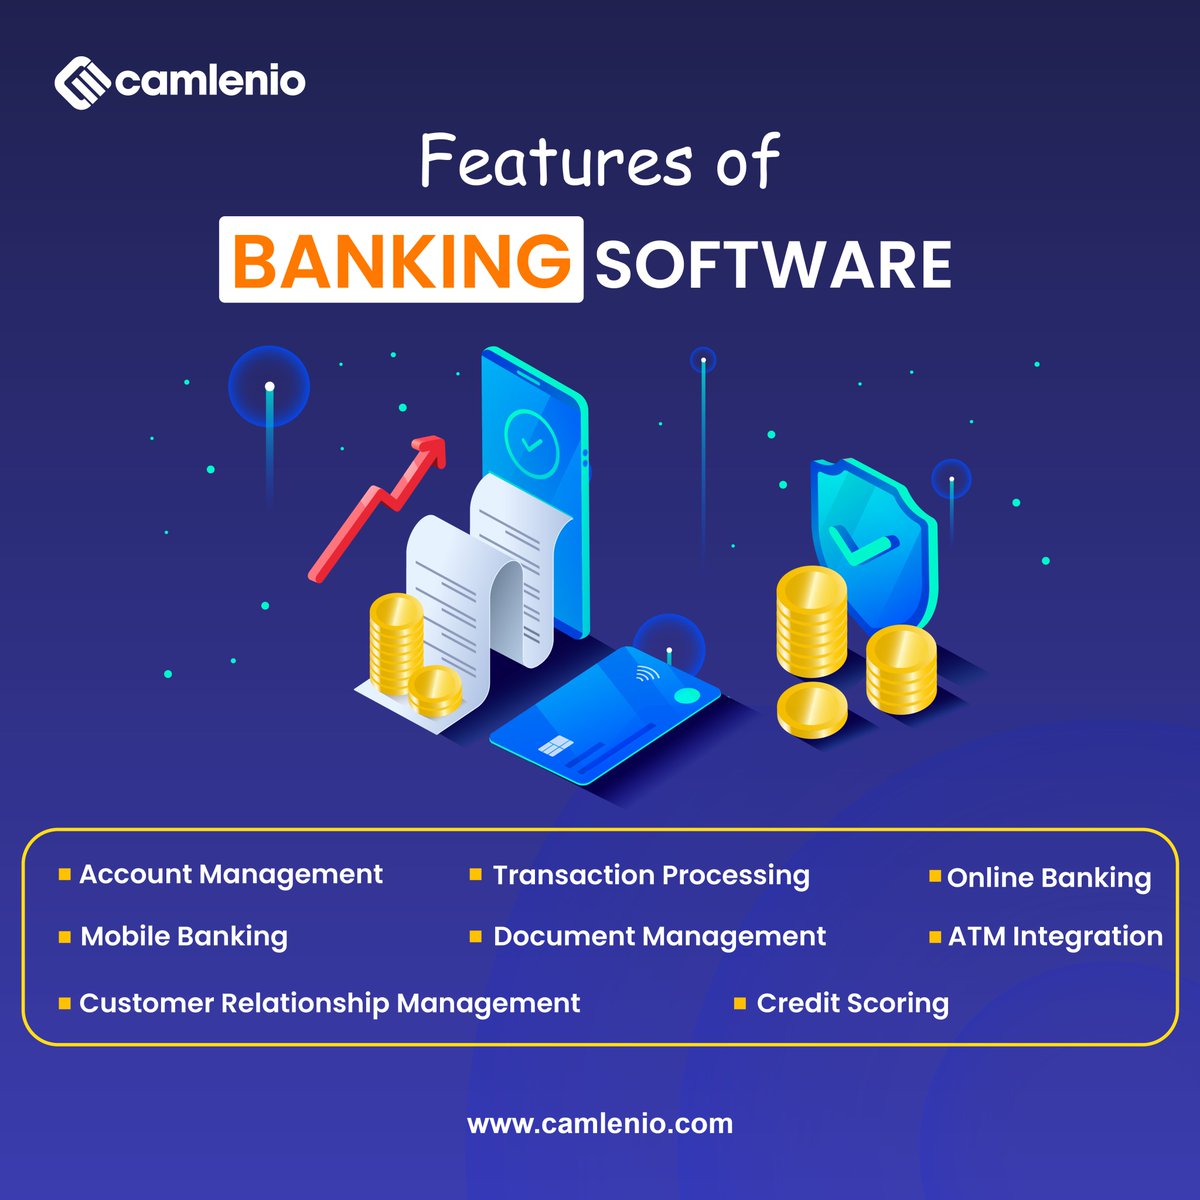 𝙀𝙭𝙘𝙞𝙩𝙞𝙣𝙜 𝙣𝙚𝙬𝙨! 𝙊𝙪𝙧 𝙗𝙖𝙣𝙠𝙞𝙣𝙜 𝙨𝙤𝙛𝙩𝙬𝙖𝙧𝙚 𝙞𝙨 𝙝𝙚𝙧𝙚 𝙩𝙤 𝙧𝙚𝙫𝙤𝙡𝙪𝙩𝙞𝙤𝙣𝙞𝙯𝙚 𝙩𝙝𝙚 𝙬𝙖𝙮 𝙮𝙤𝙪 𝙢𝙖𝙣𝙖𝙜𝙚 𝙛𝙞𝙣𝙖𝙣𝙘𝙚𝙨.
#bankingsoftware #fintech #digitalbanking #camlenio #financialtechnology #bankingsolutions #camlenio